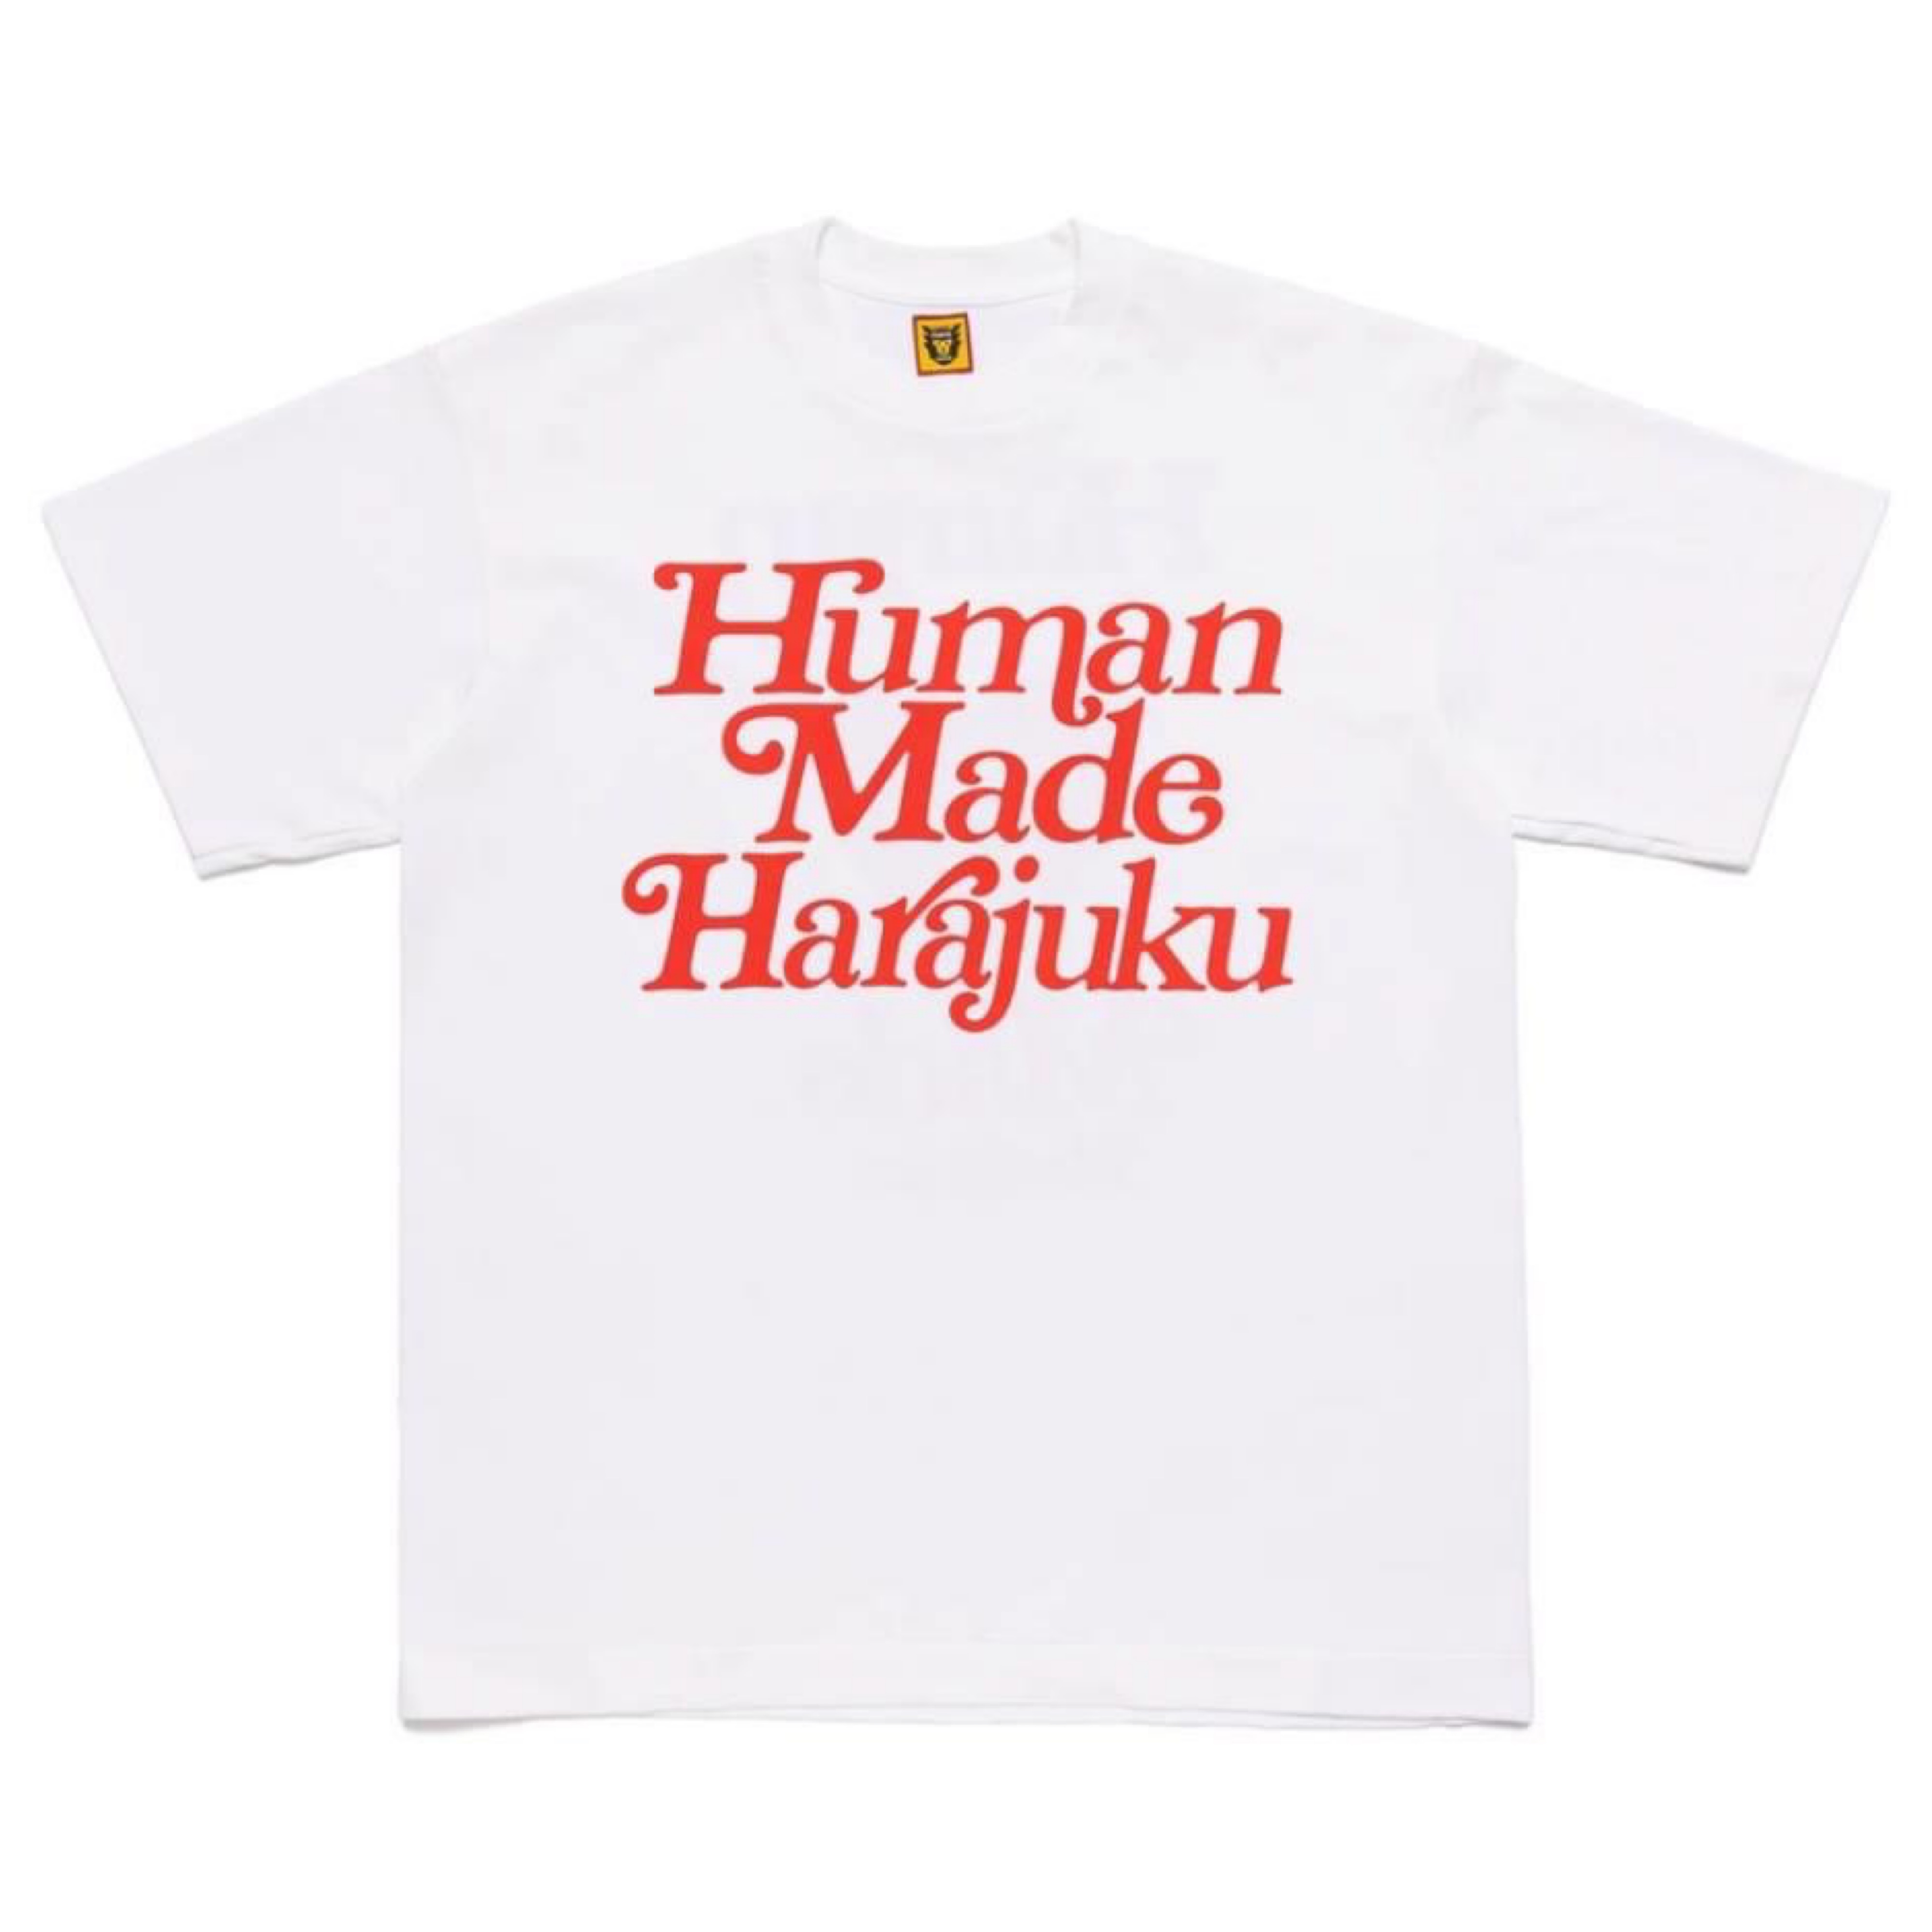 Human Made x Girls Don't Cry Harajuku Tee #2 (White)